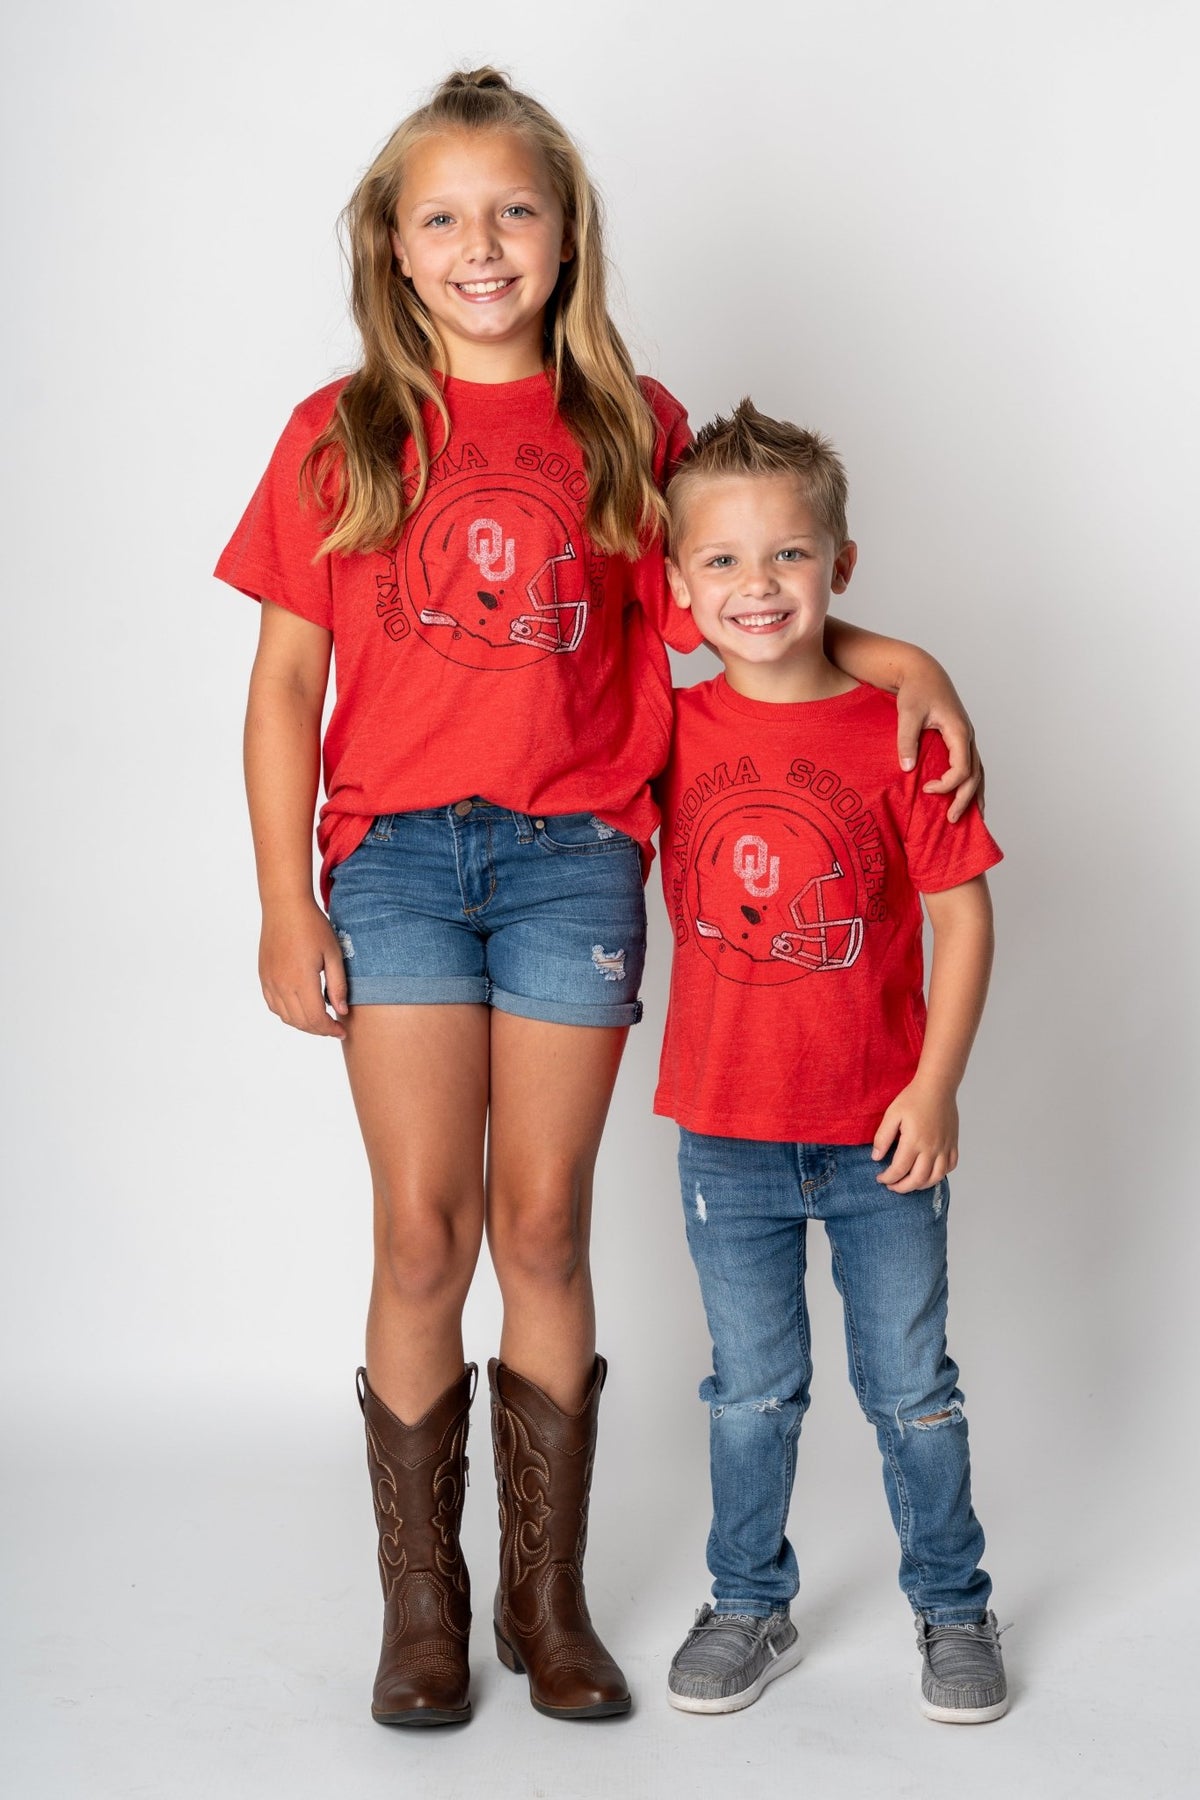 OU Kids OU helmet circle t-shirt red T-shirts | Lush Fashion Lounge Trendy Oklahoma University Sooners Apparel & Cute Gameday T-Shirts